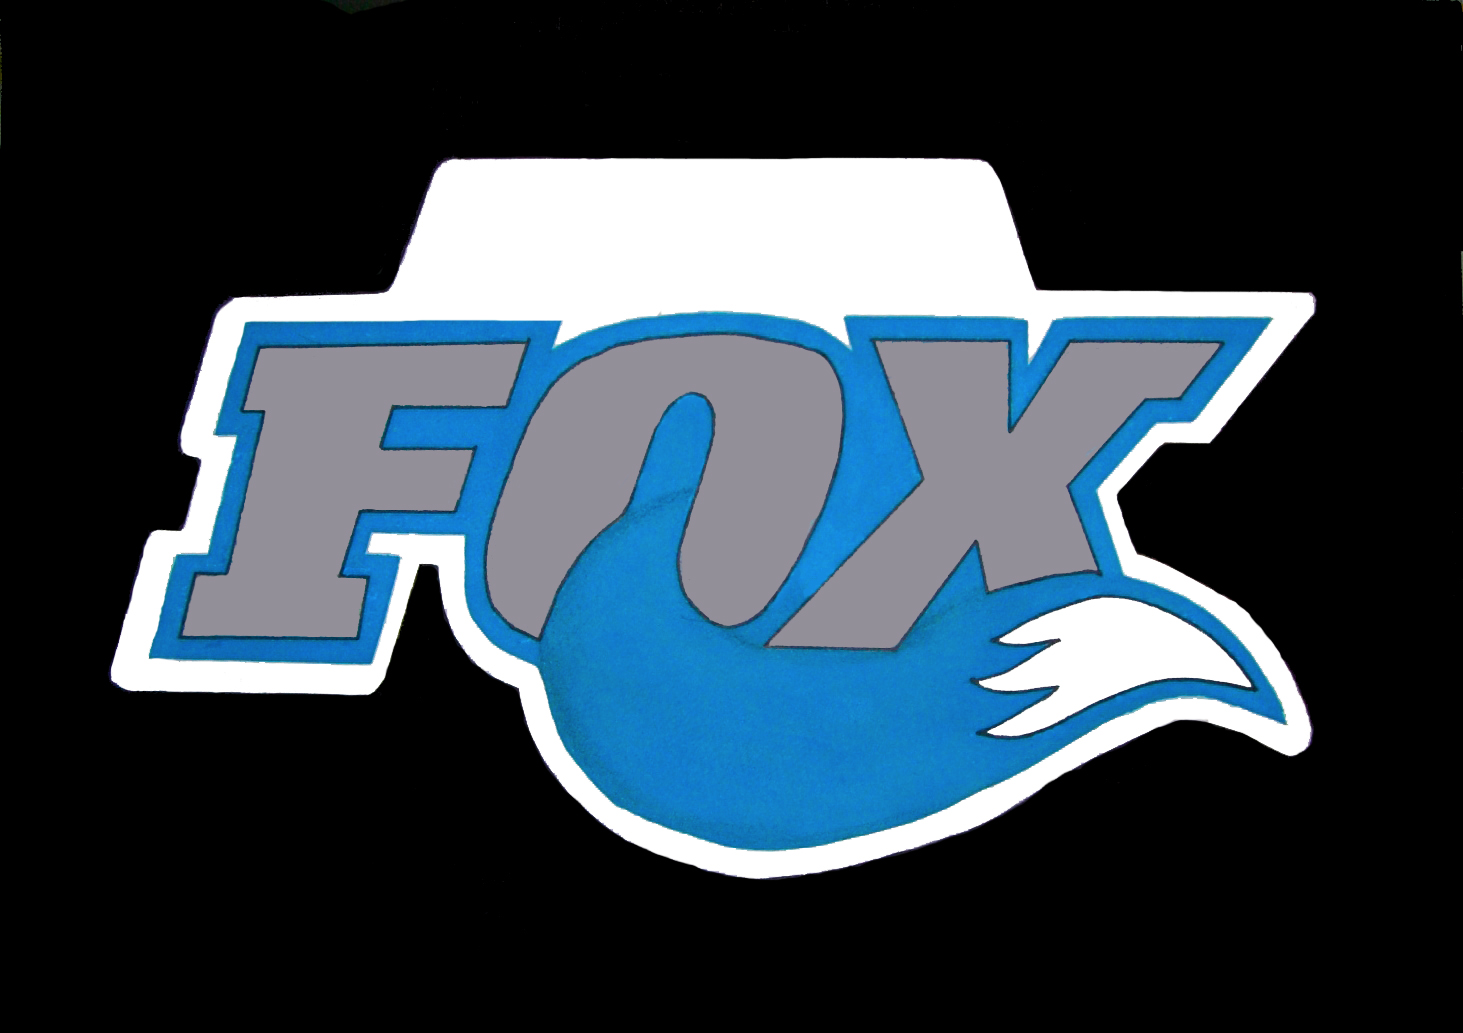  2010 logo silver fox by phoenixkai on deviantart fox logo 5 00